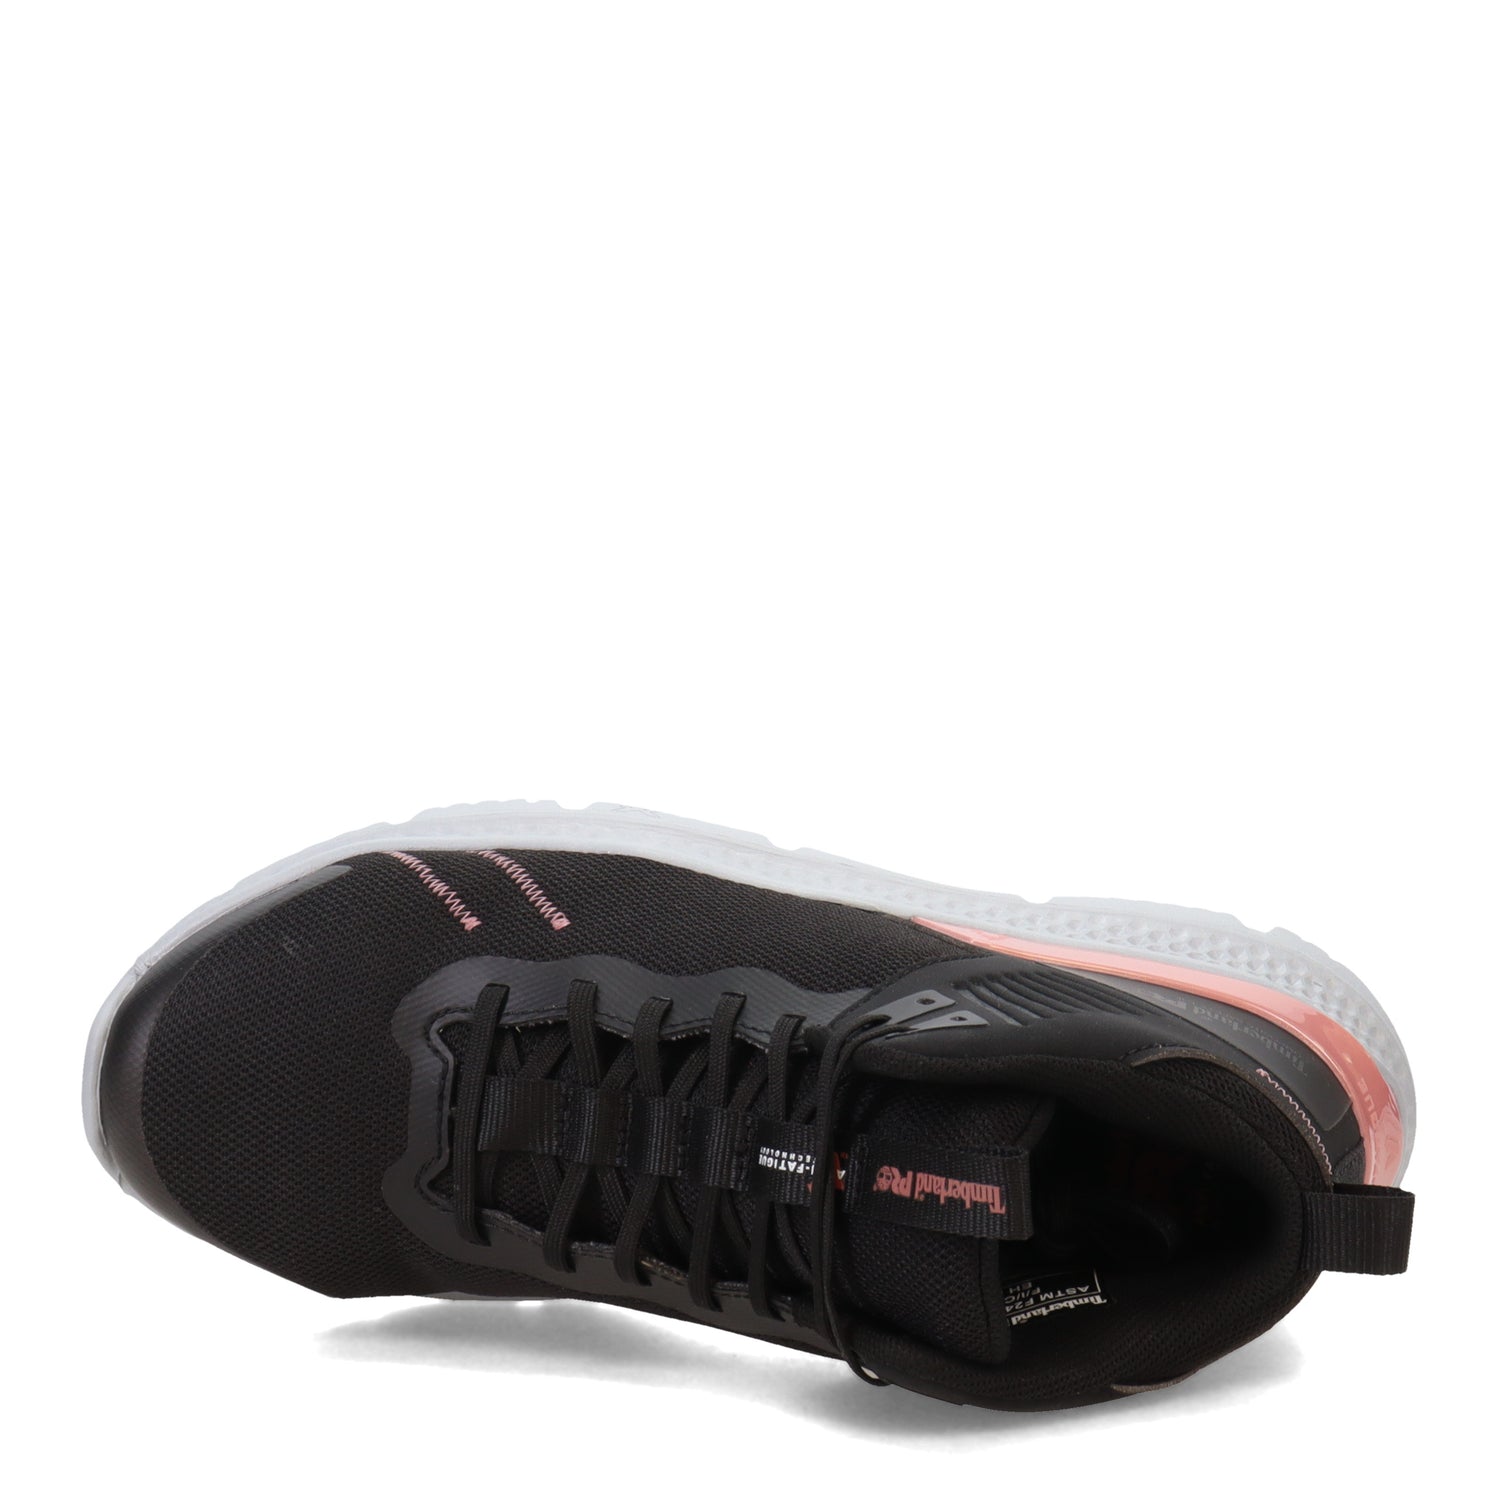 Peltz Shoes  Women's Timberland Pro Setra Mid Comp Toe Work Boot Black/Rose TB0A5UVU001